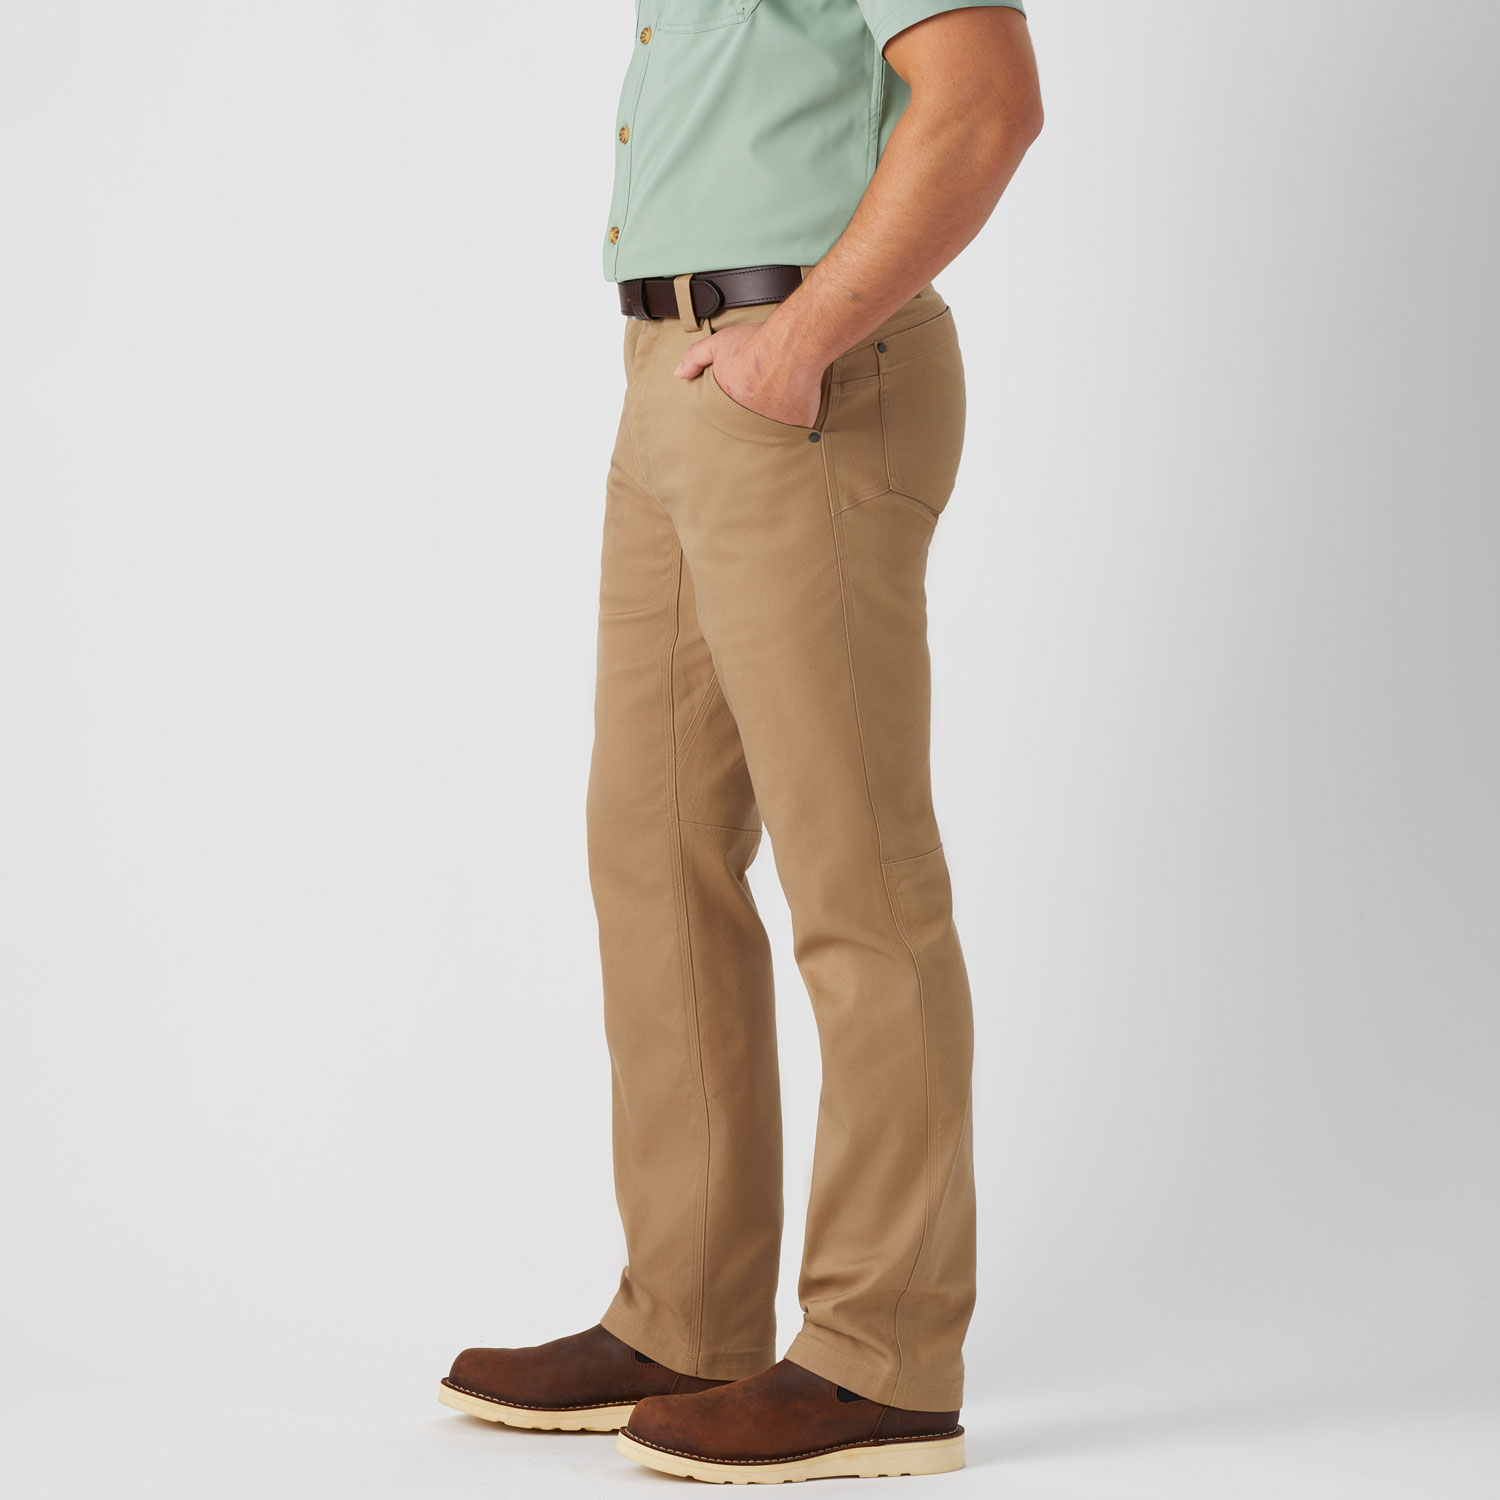 Men's DuluthFlex Fire Hose HD Standard Fit Pants